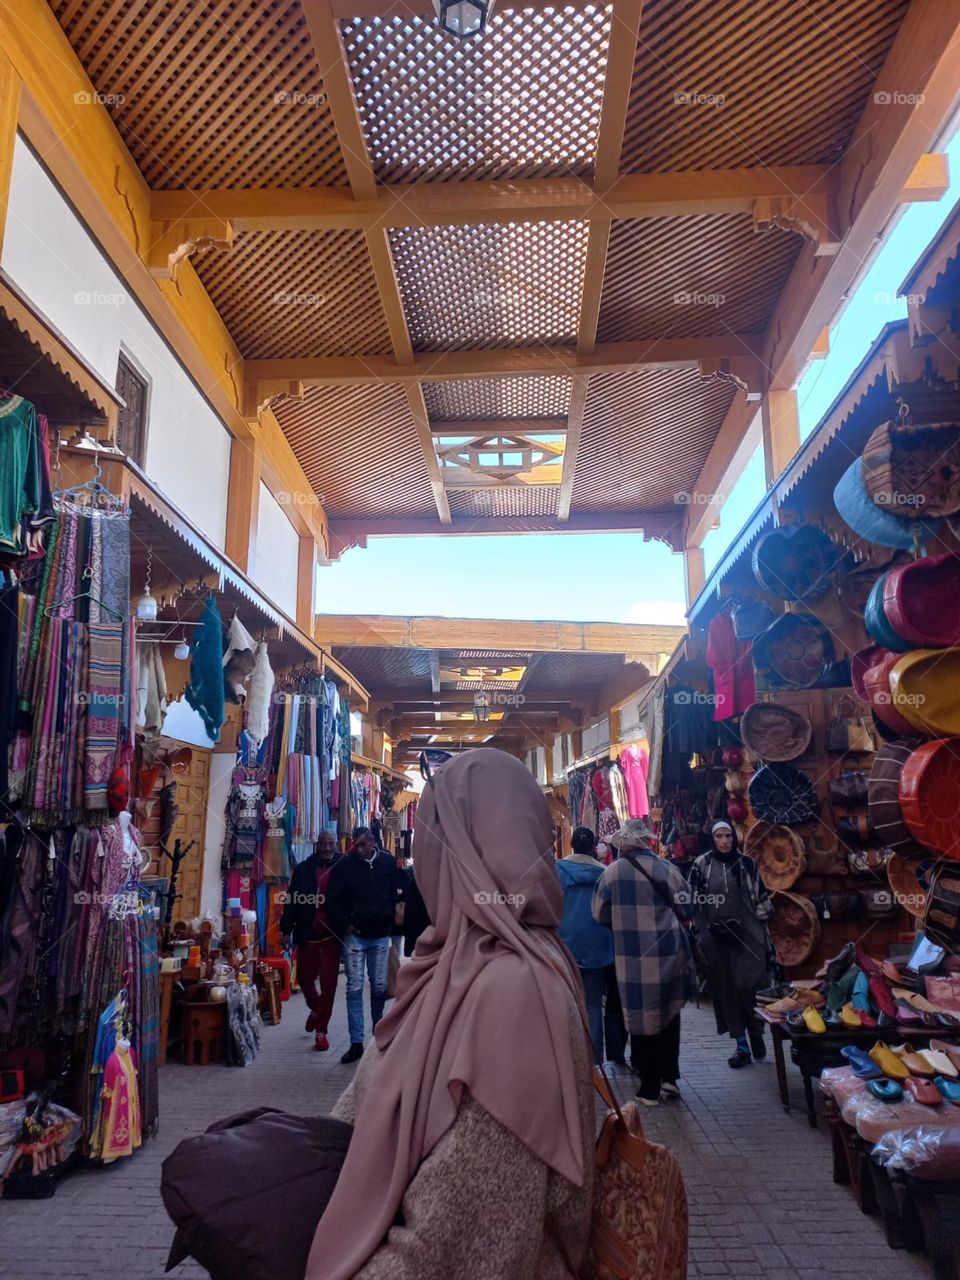 In medinah, Rabat